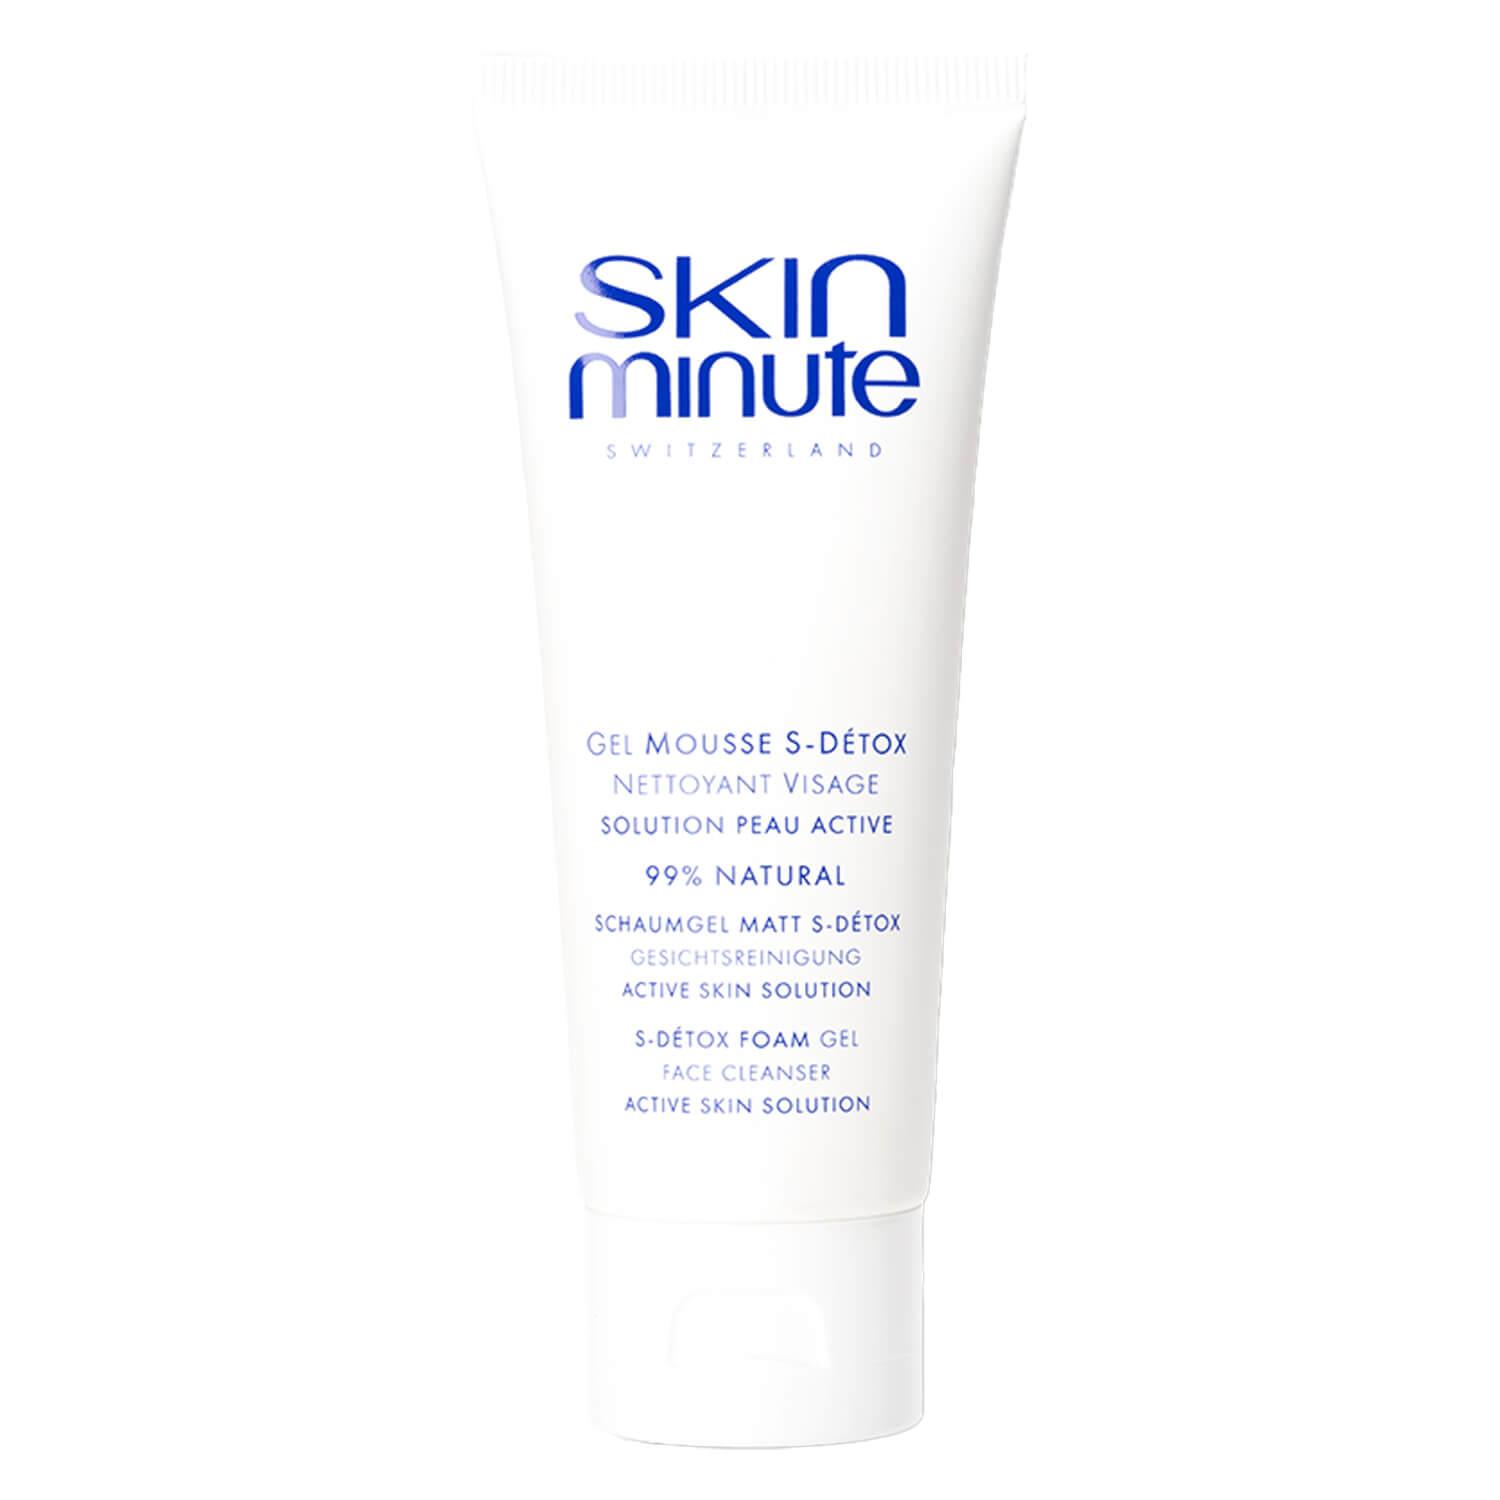 skinminute - S-Détox Foam Gel Face Cleanser